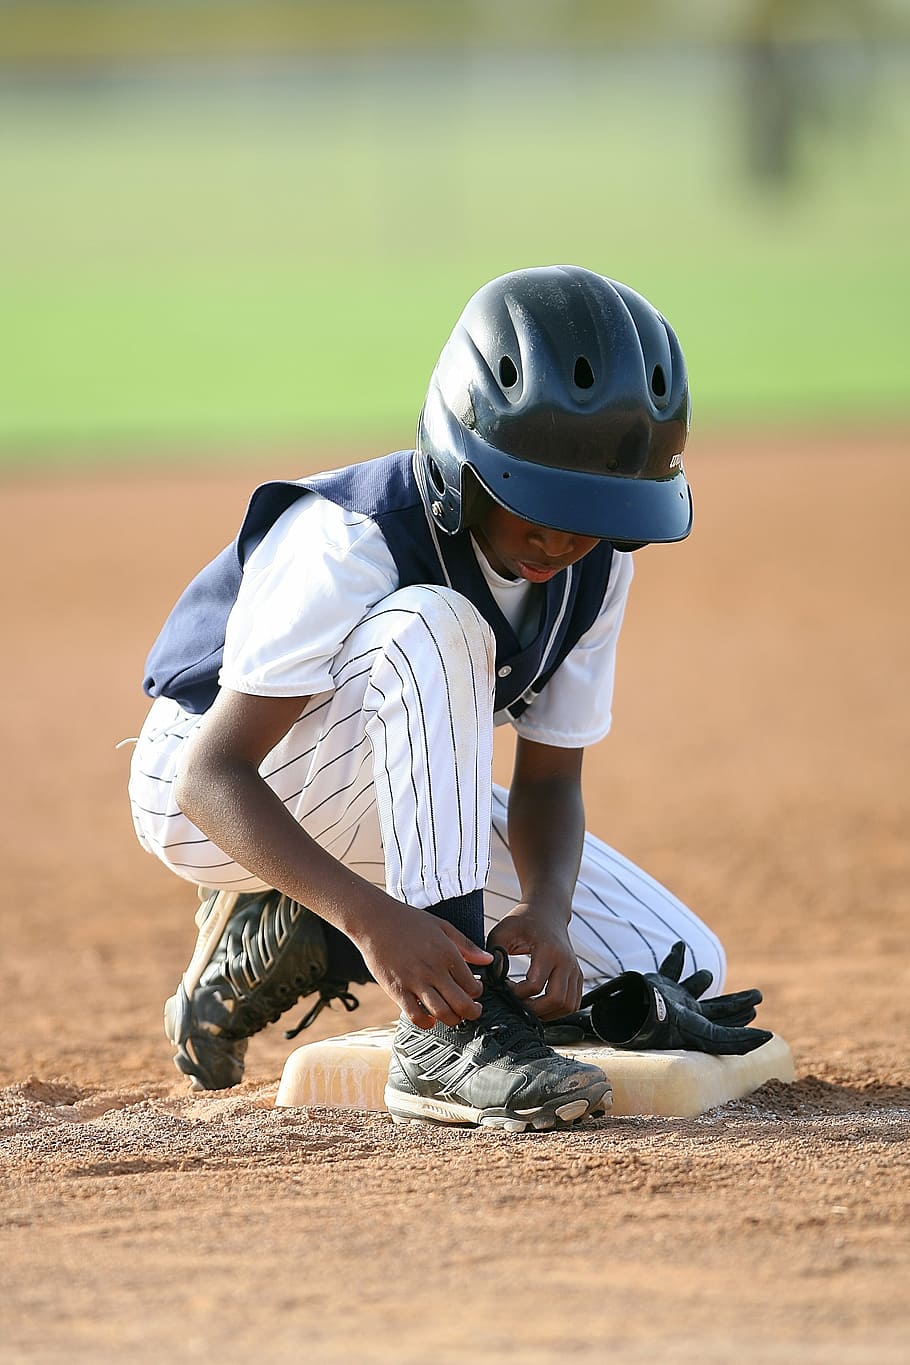 baseball, sport, player, game, activity, baseball player, play, child, male, uniform